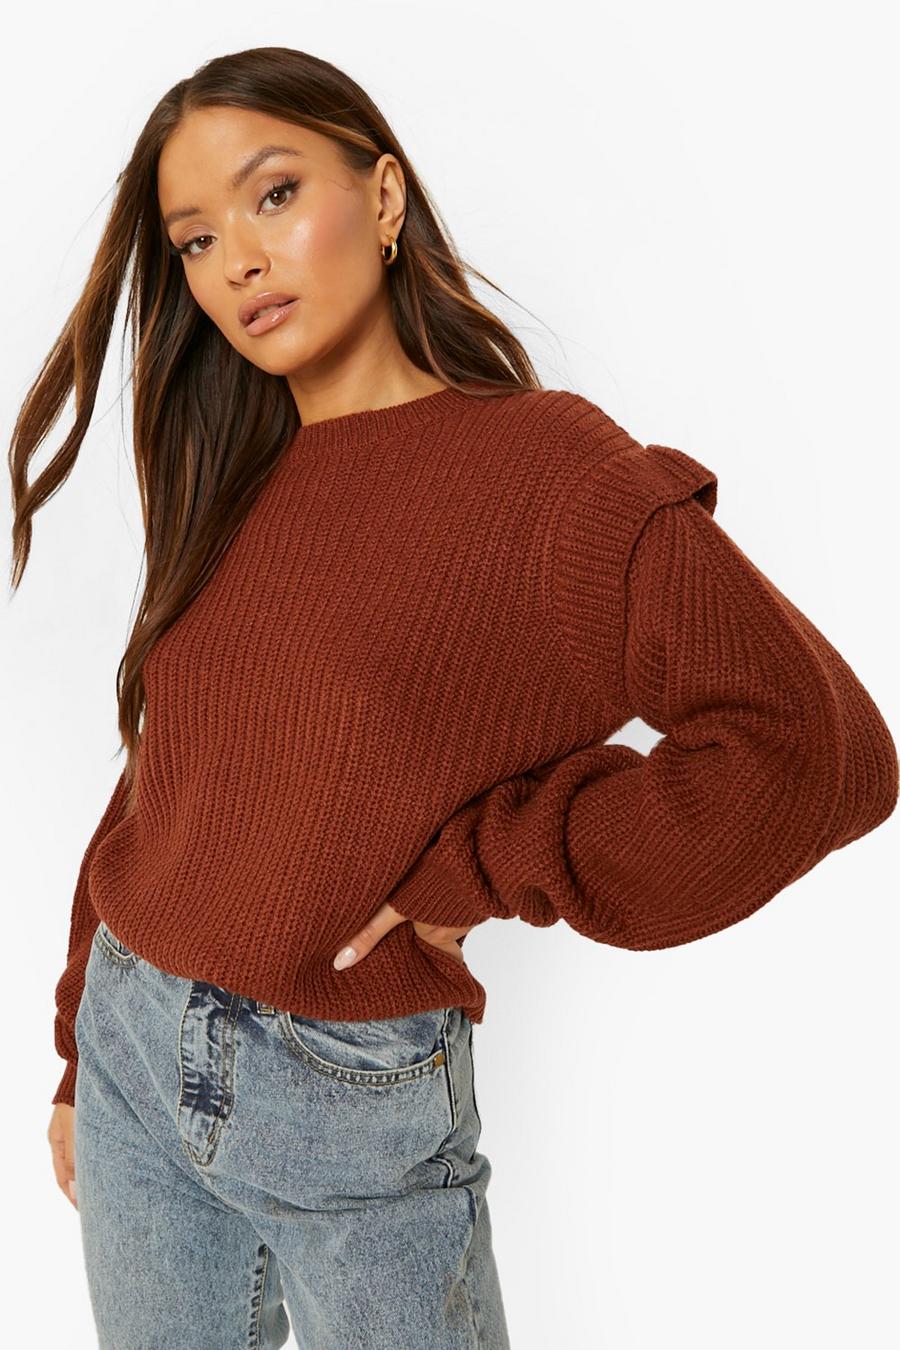 Mahogany brown Shoulder Detail Sweater